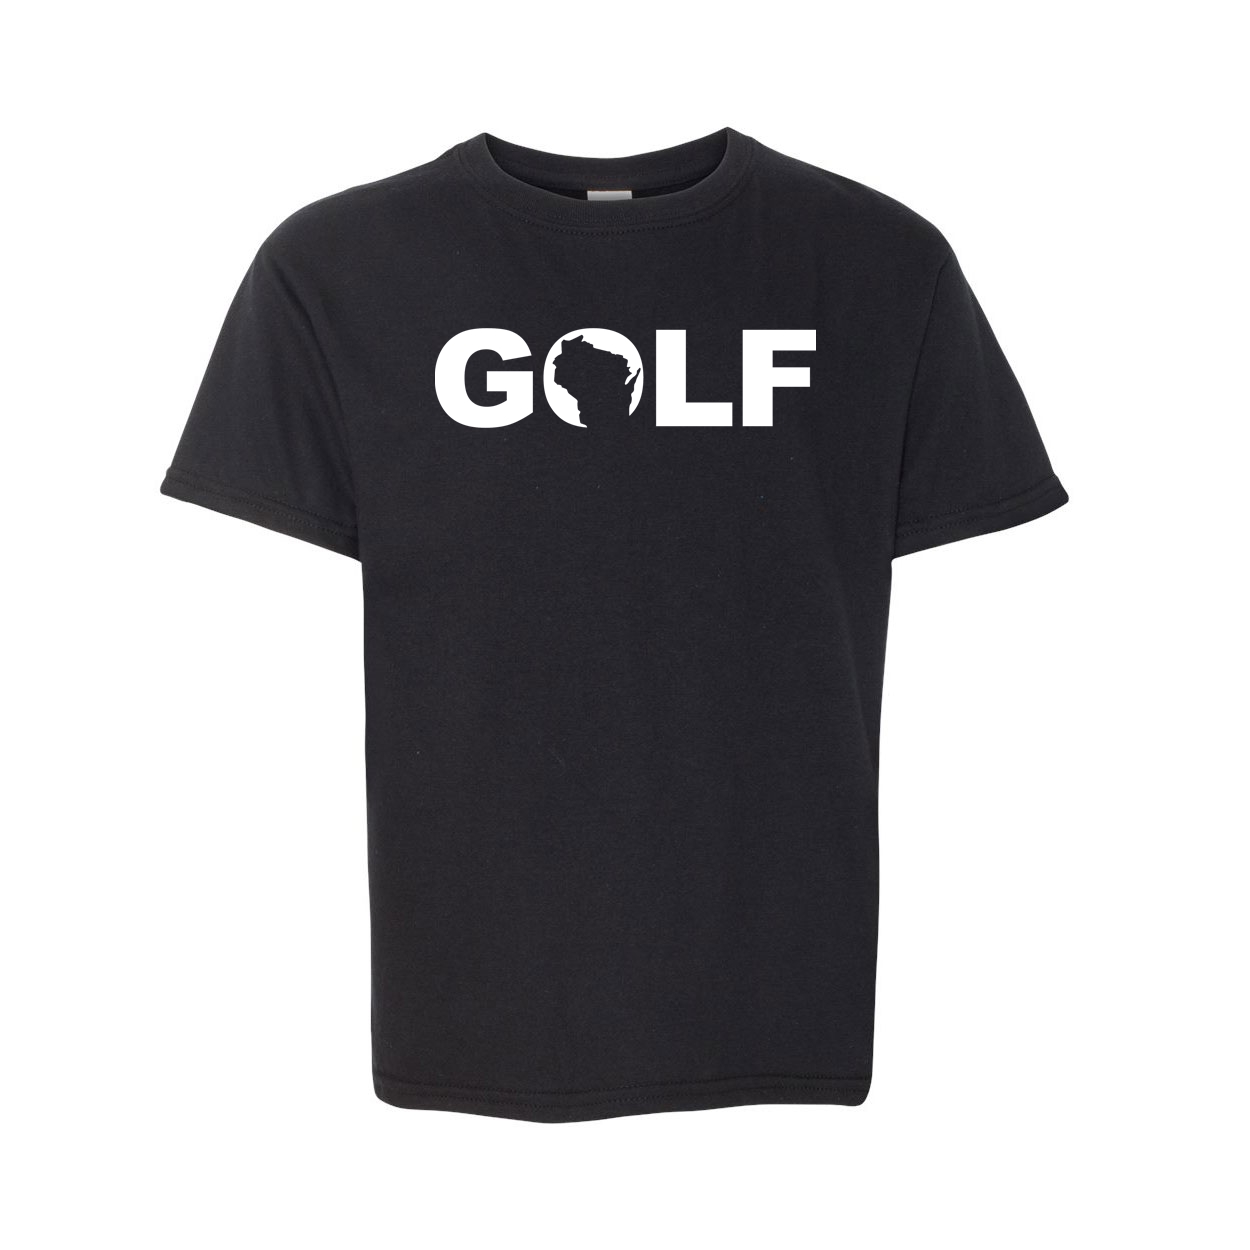 Golf Wisconsin Classic Youth T-Shirt Black (White Logo)